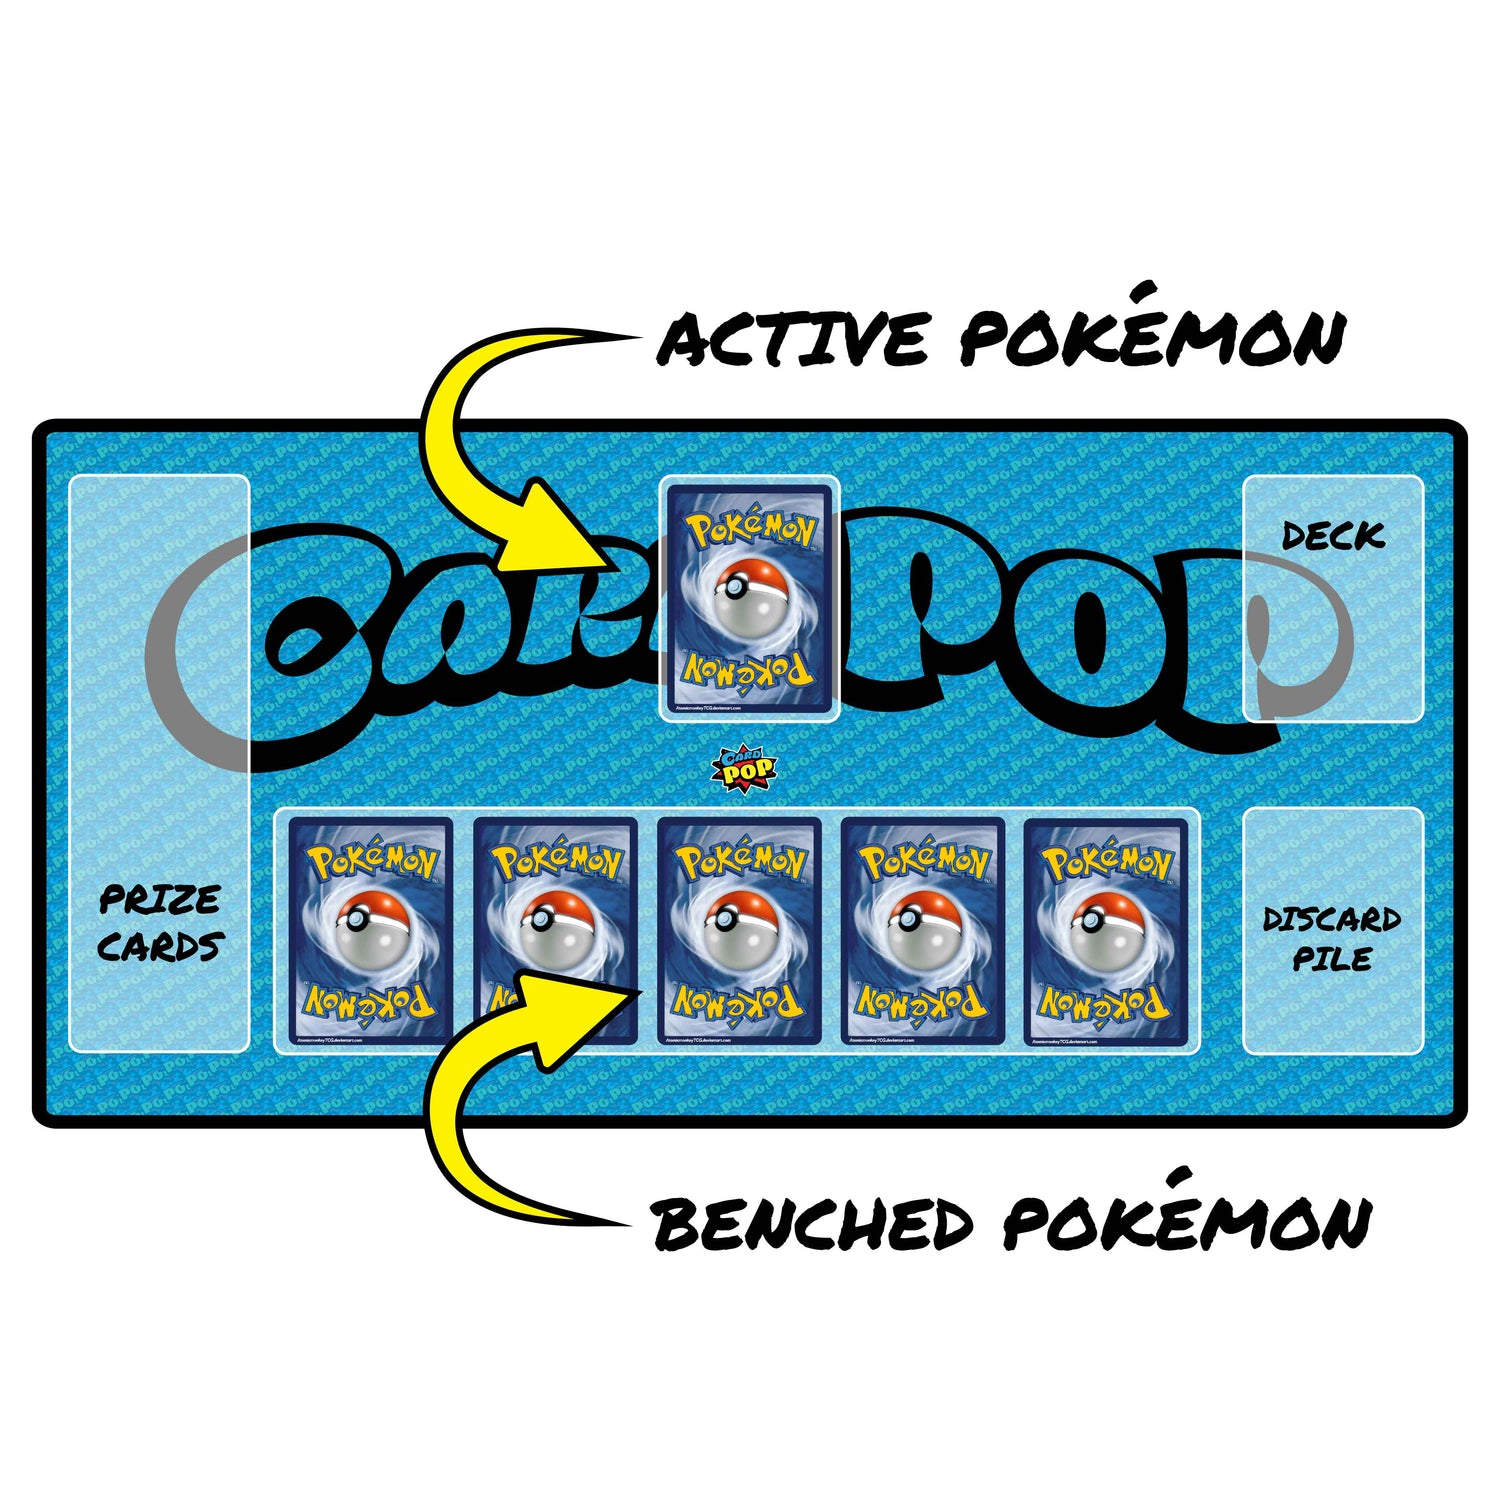 Cardpop logo of pokemon Board state